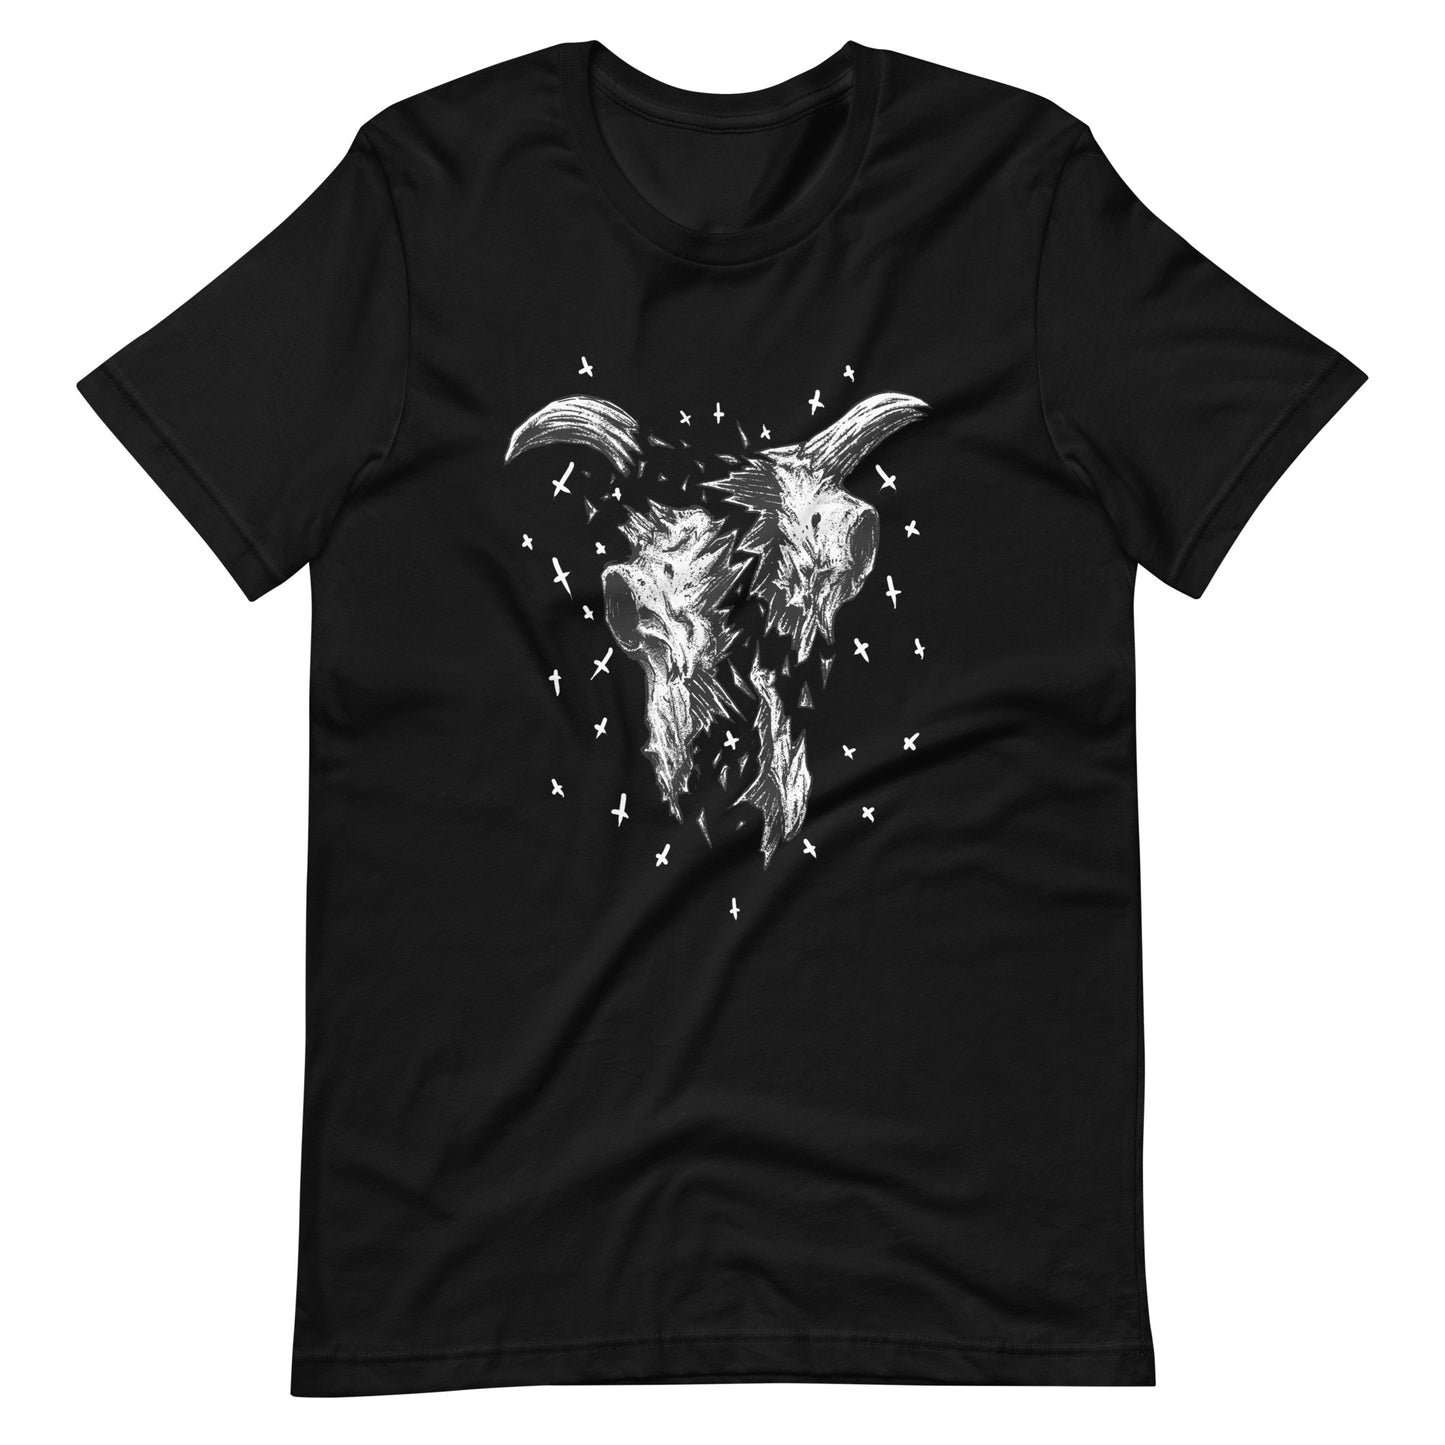 Crushed - Men's t-shirt - Black Front